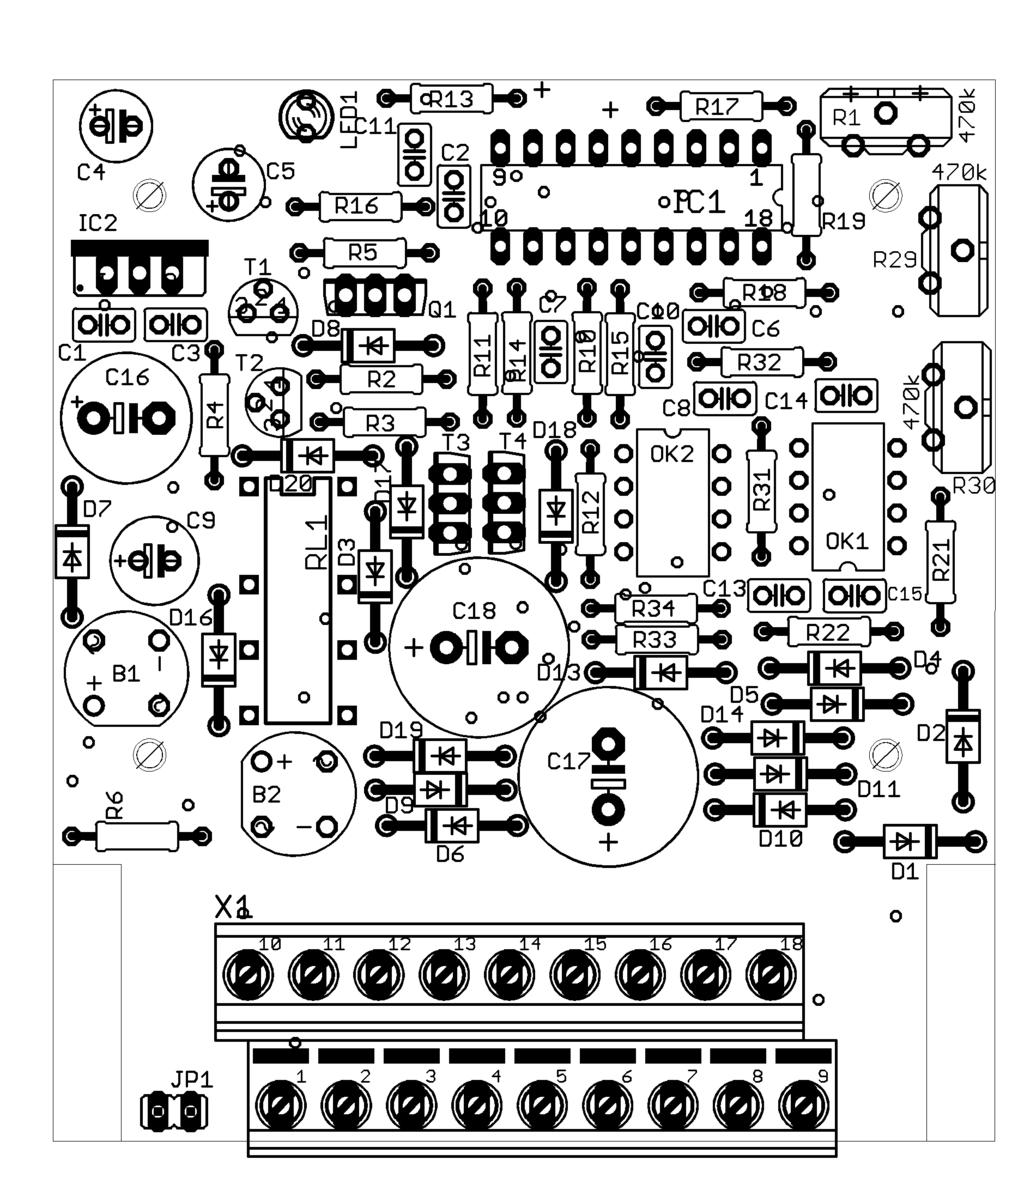 Spannungsregler - Voltage regulators IC2 7805 Régulat. de tension - Spanningsregelaars Relais RL1 2 x Um Anreihklemme - Terminal strip Bornier - Printkroonstaan X1 9-pol.